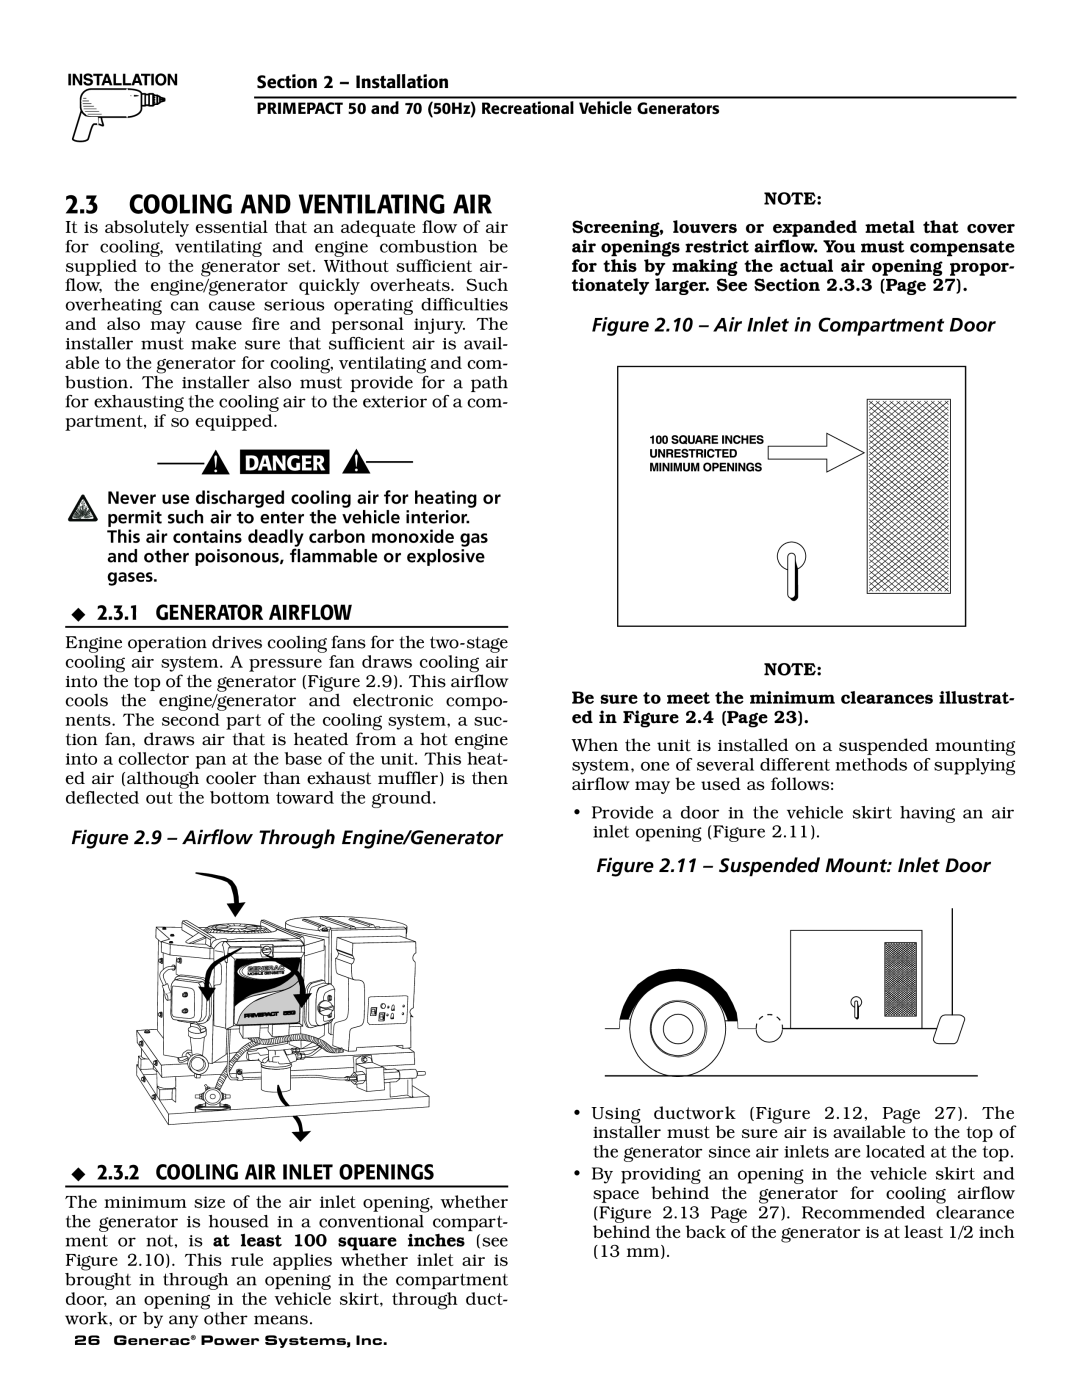 Generac 00784-2, 09290-4 owner manual Cooling And Ventilating Air, Generator Airflow, Cooling Air Inlet Openings 